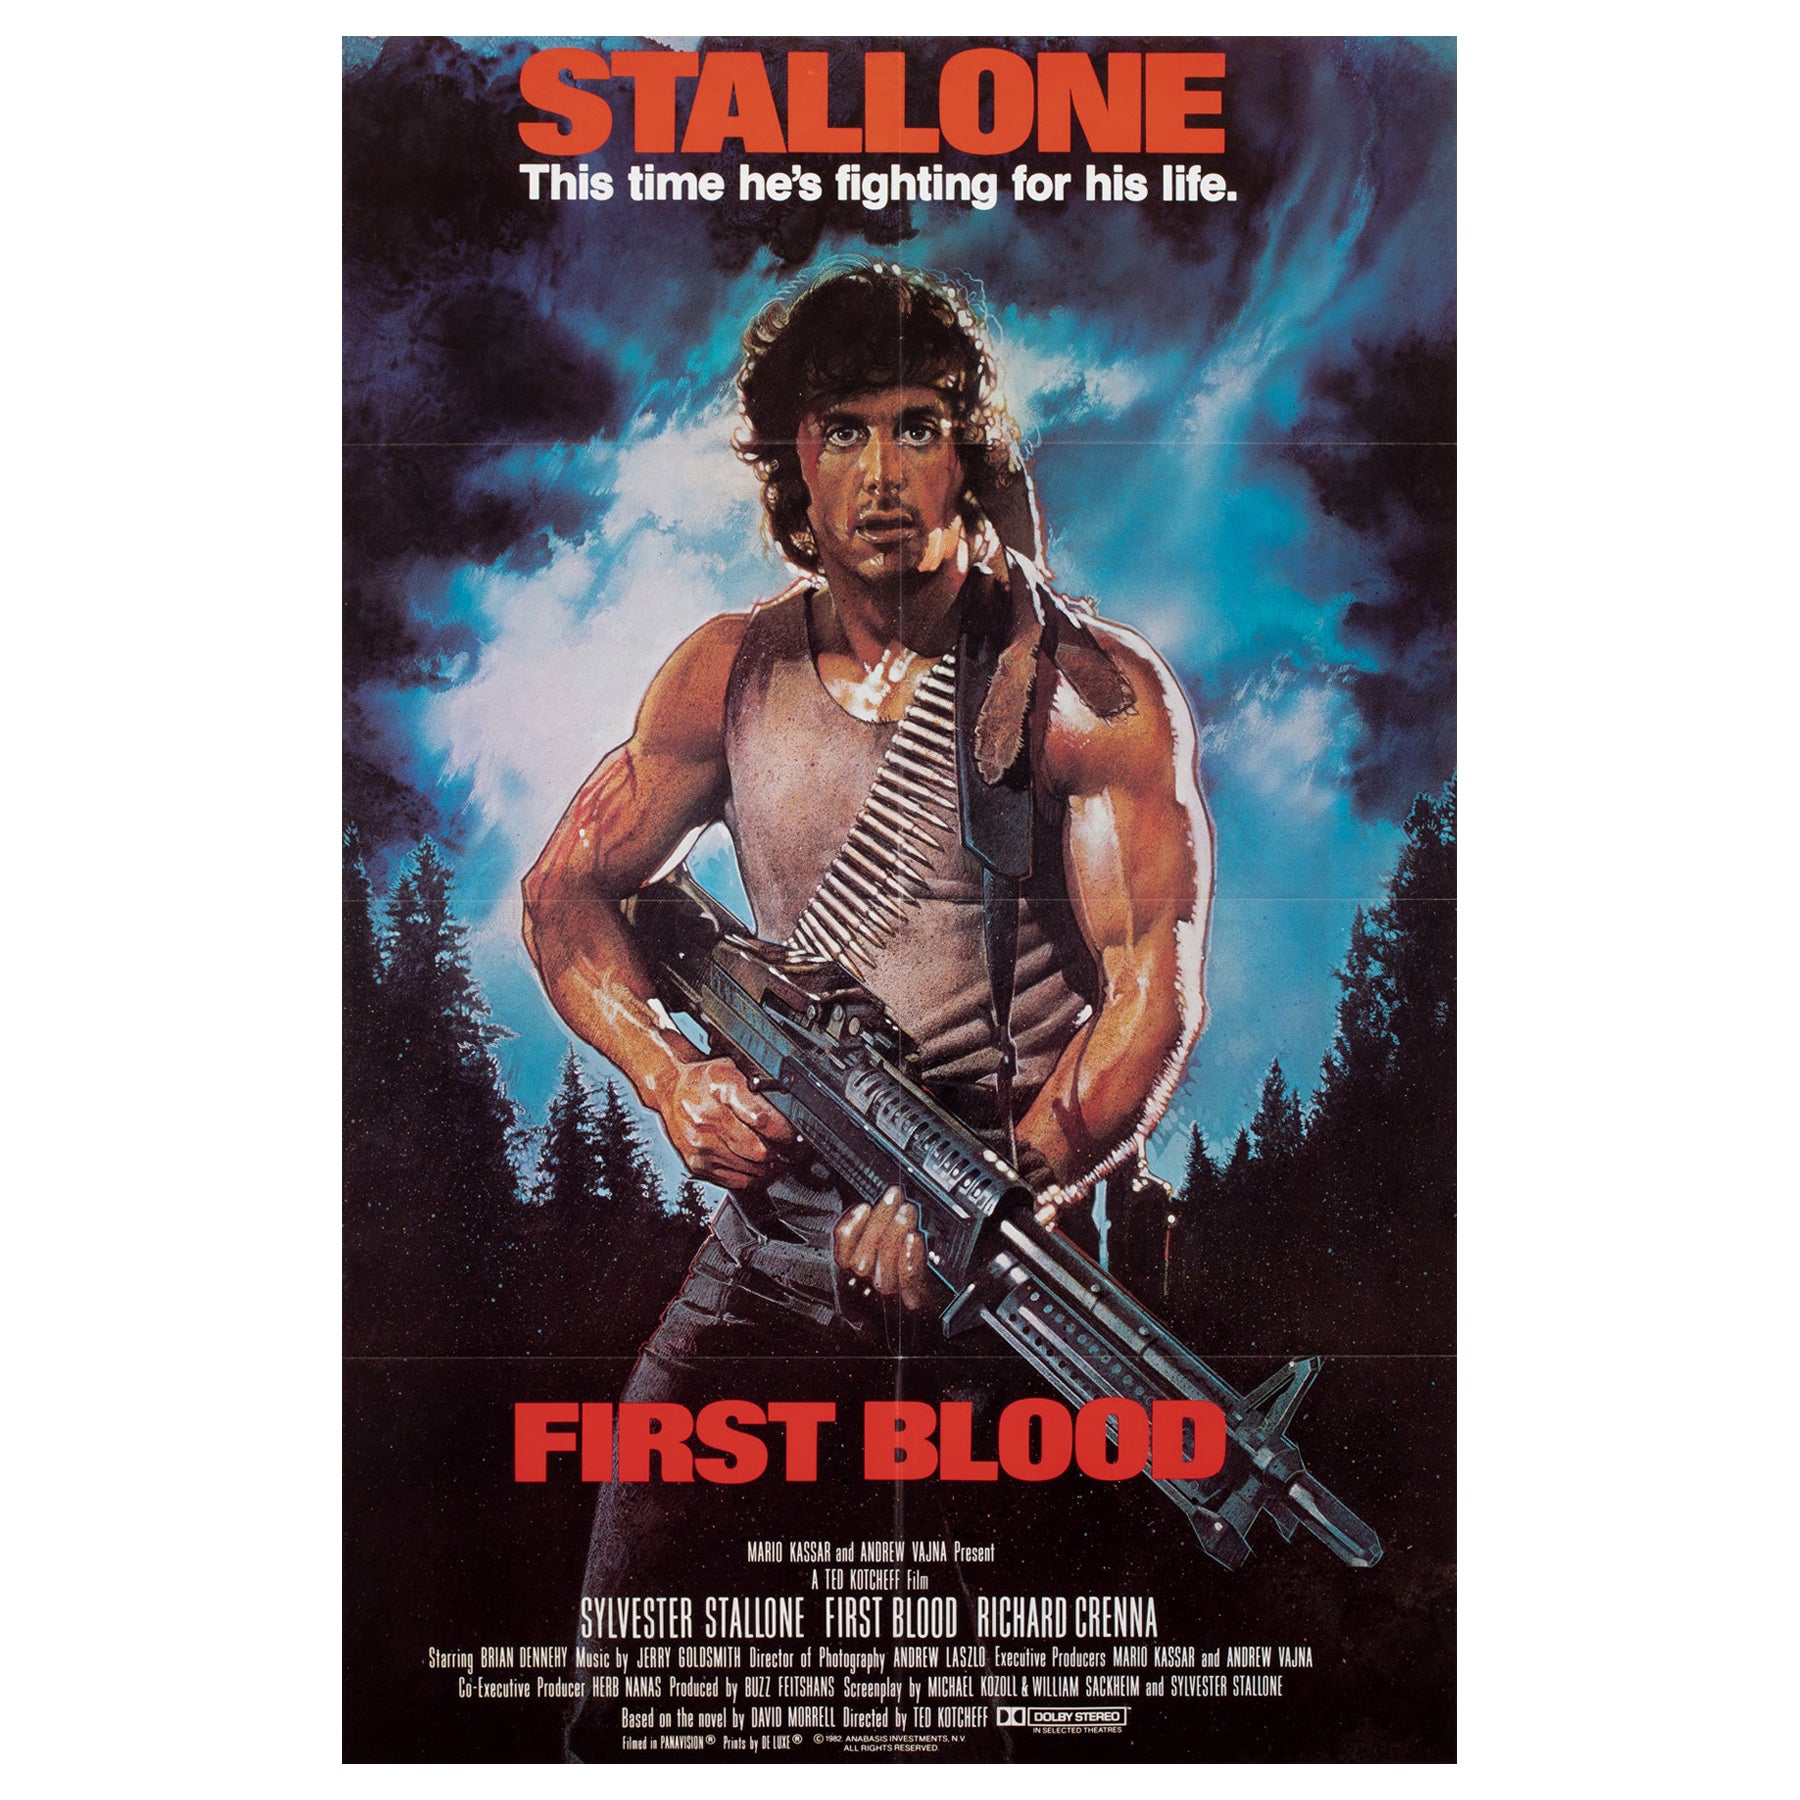 FIRST BLOOD RAMBO 1982 US 1 Sheet Film Movie Poster, DREW STRUZAN For Sale